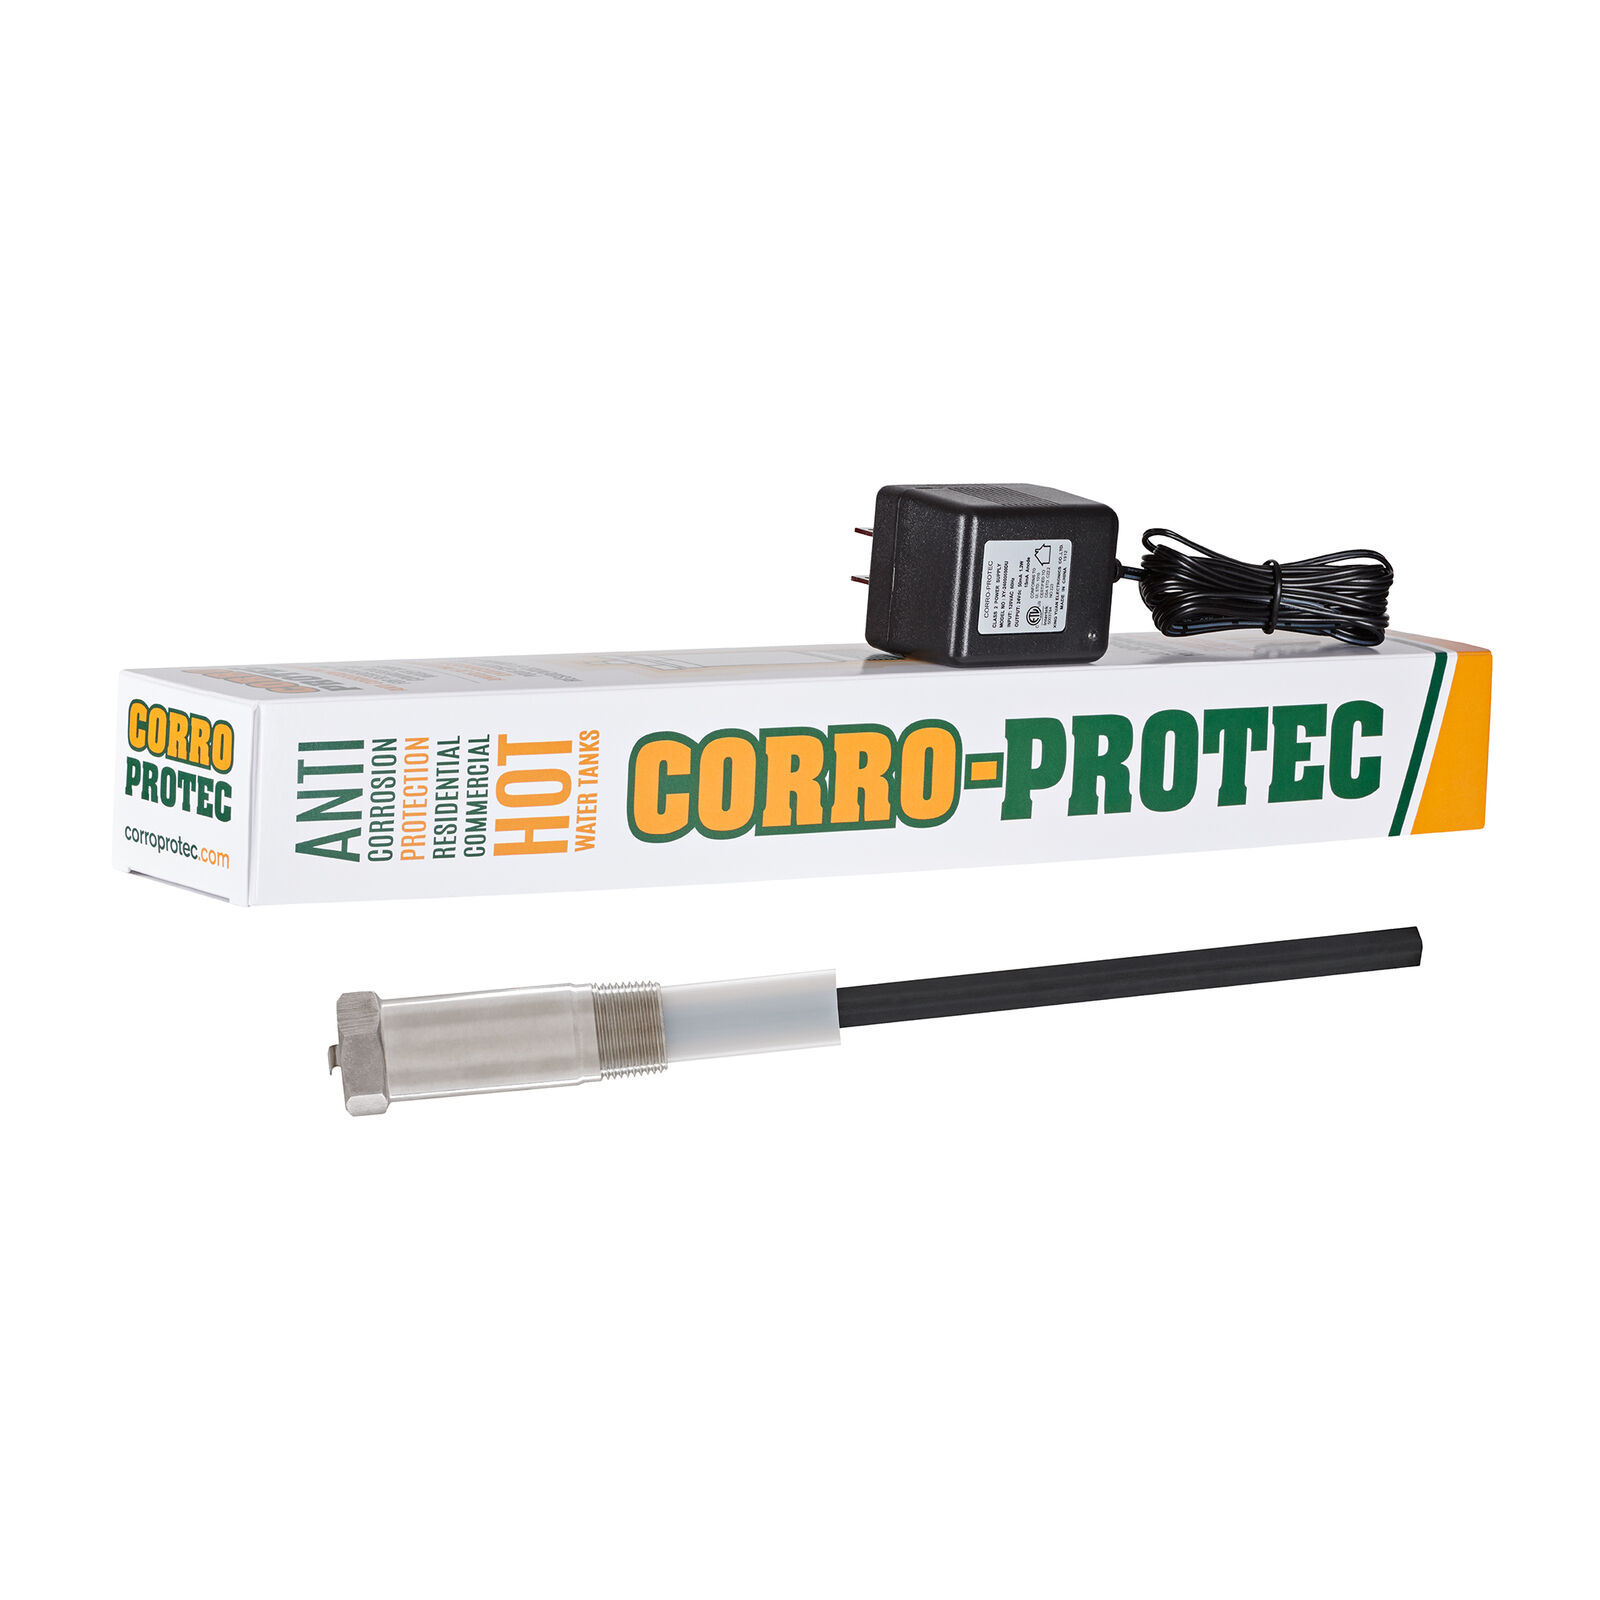 Corro-Protec powered anode